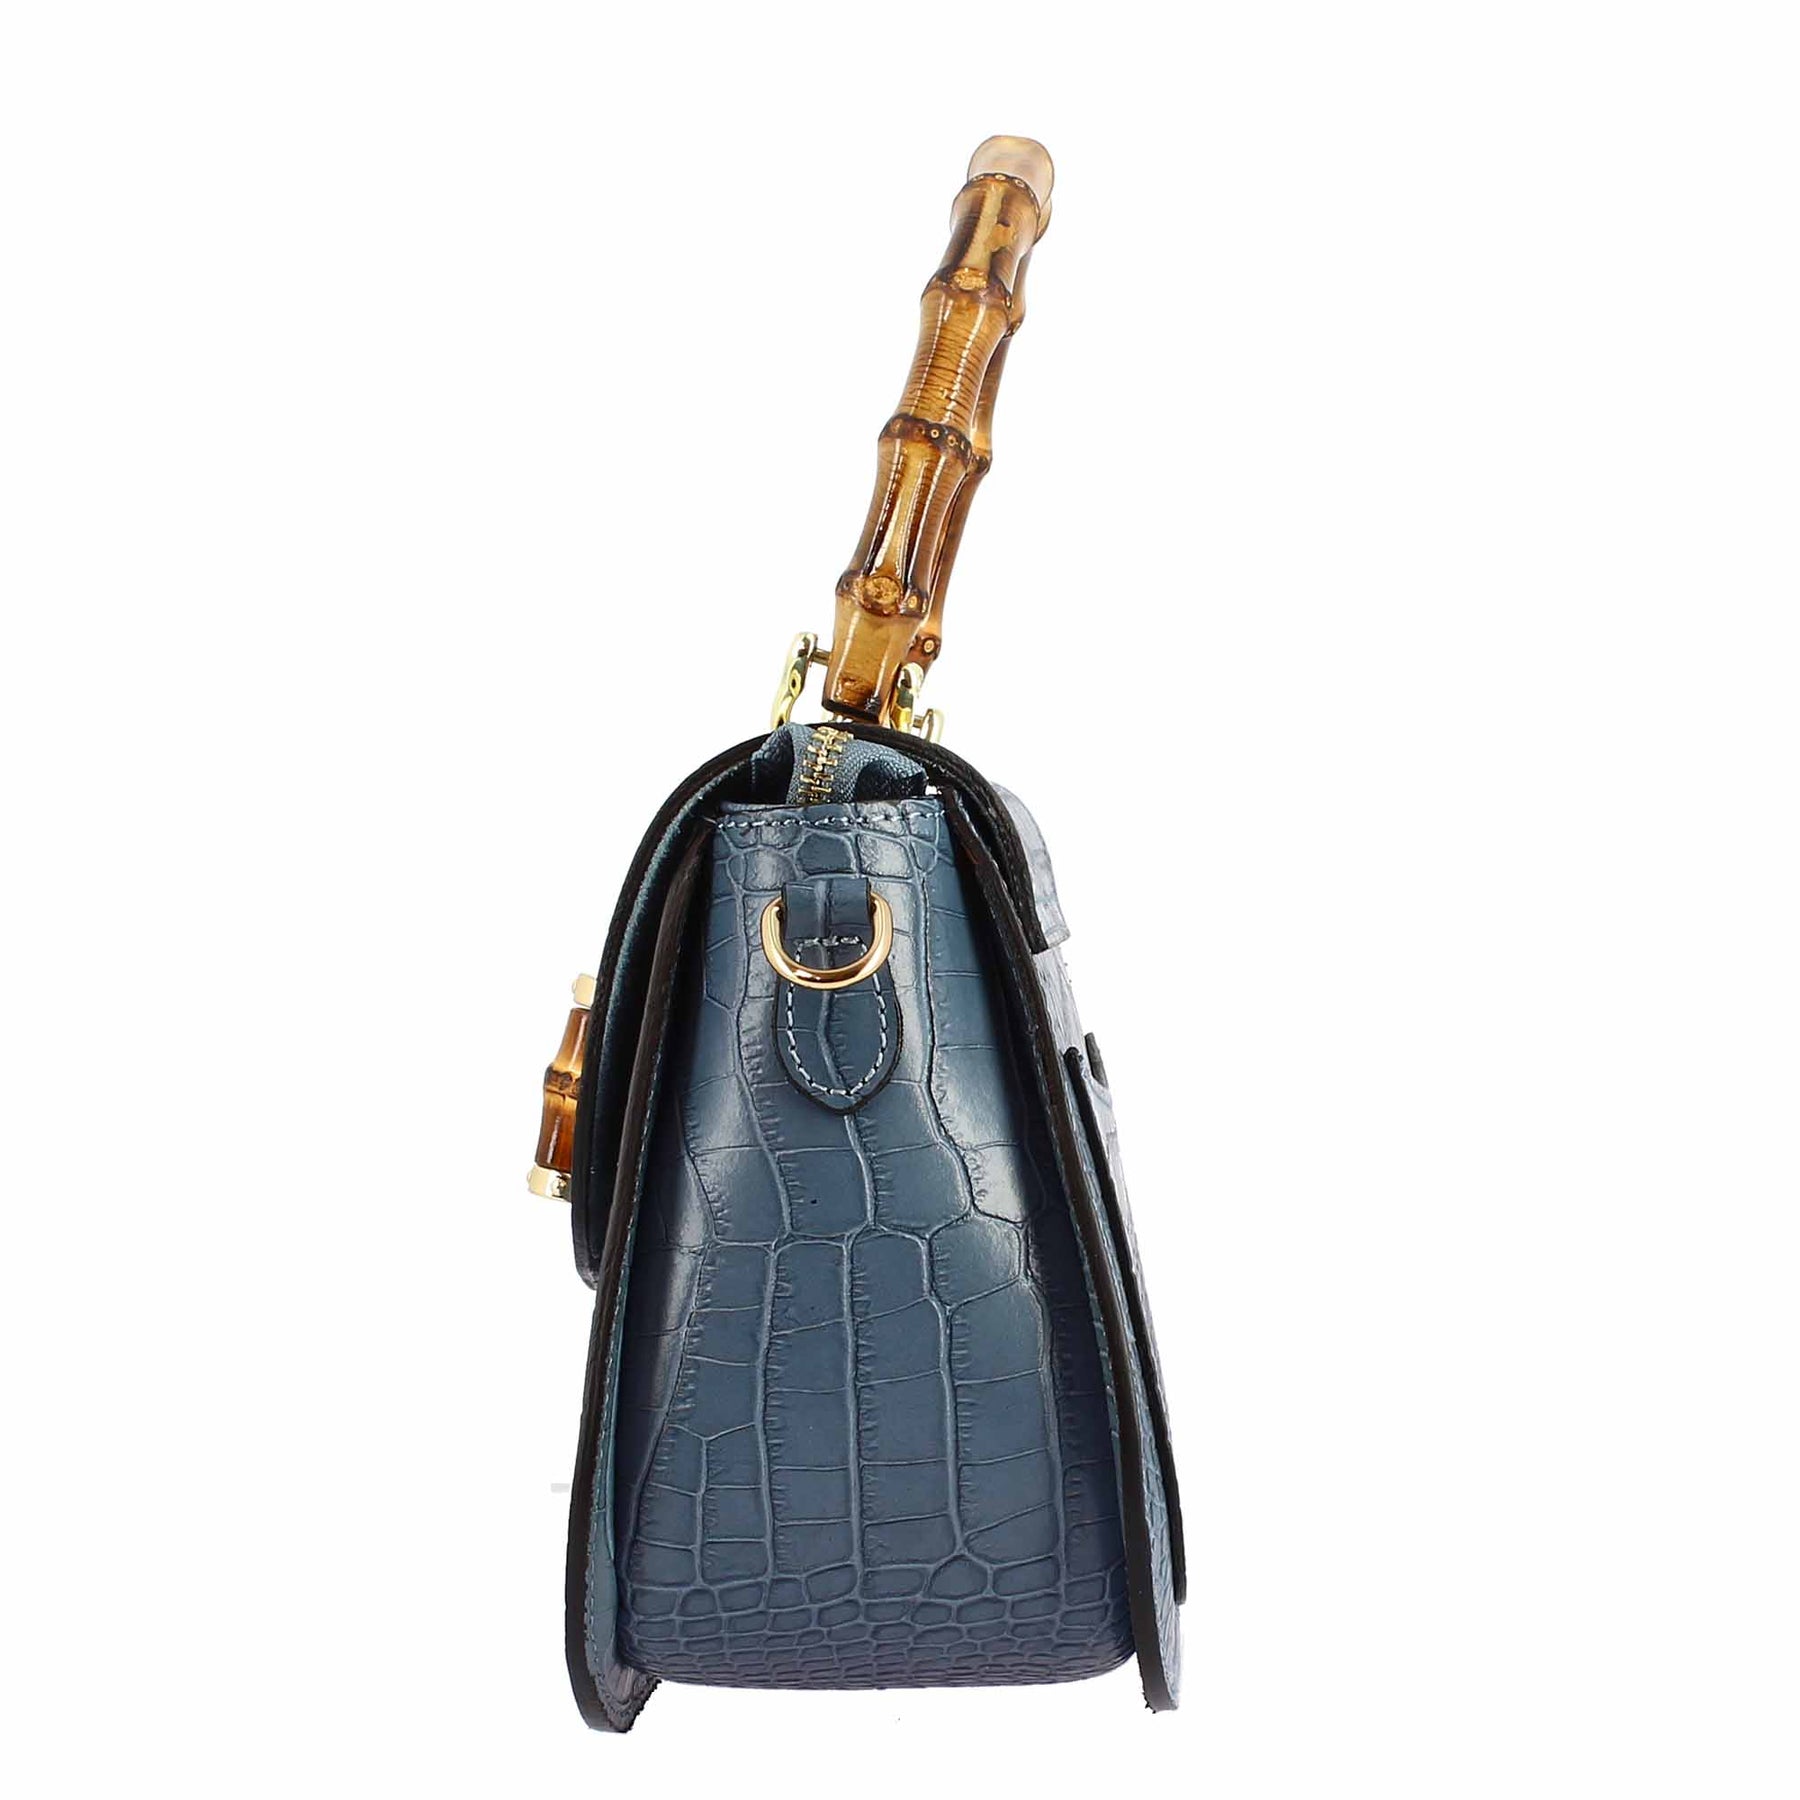 Handmade women's handbag in light blue leather with removable shoulder strap